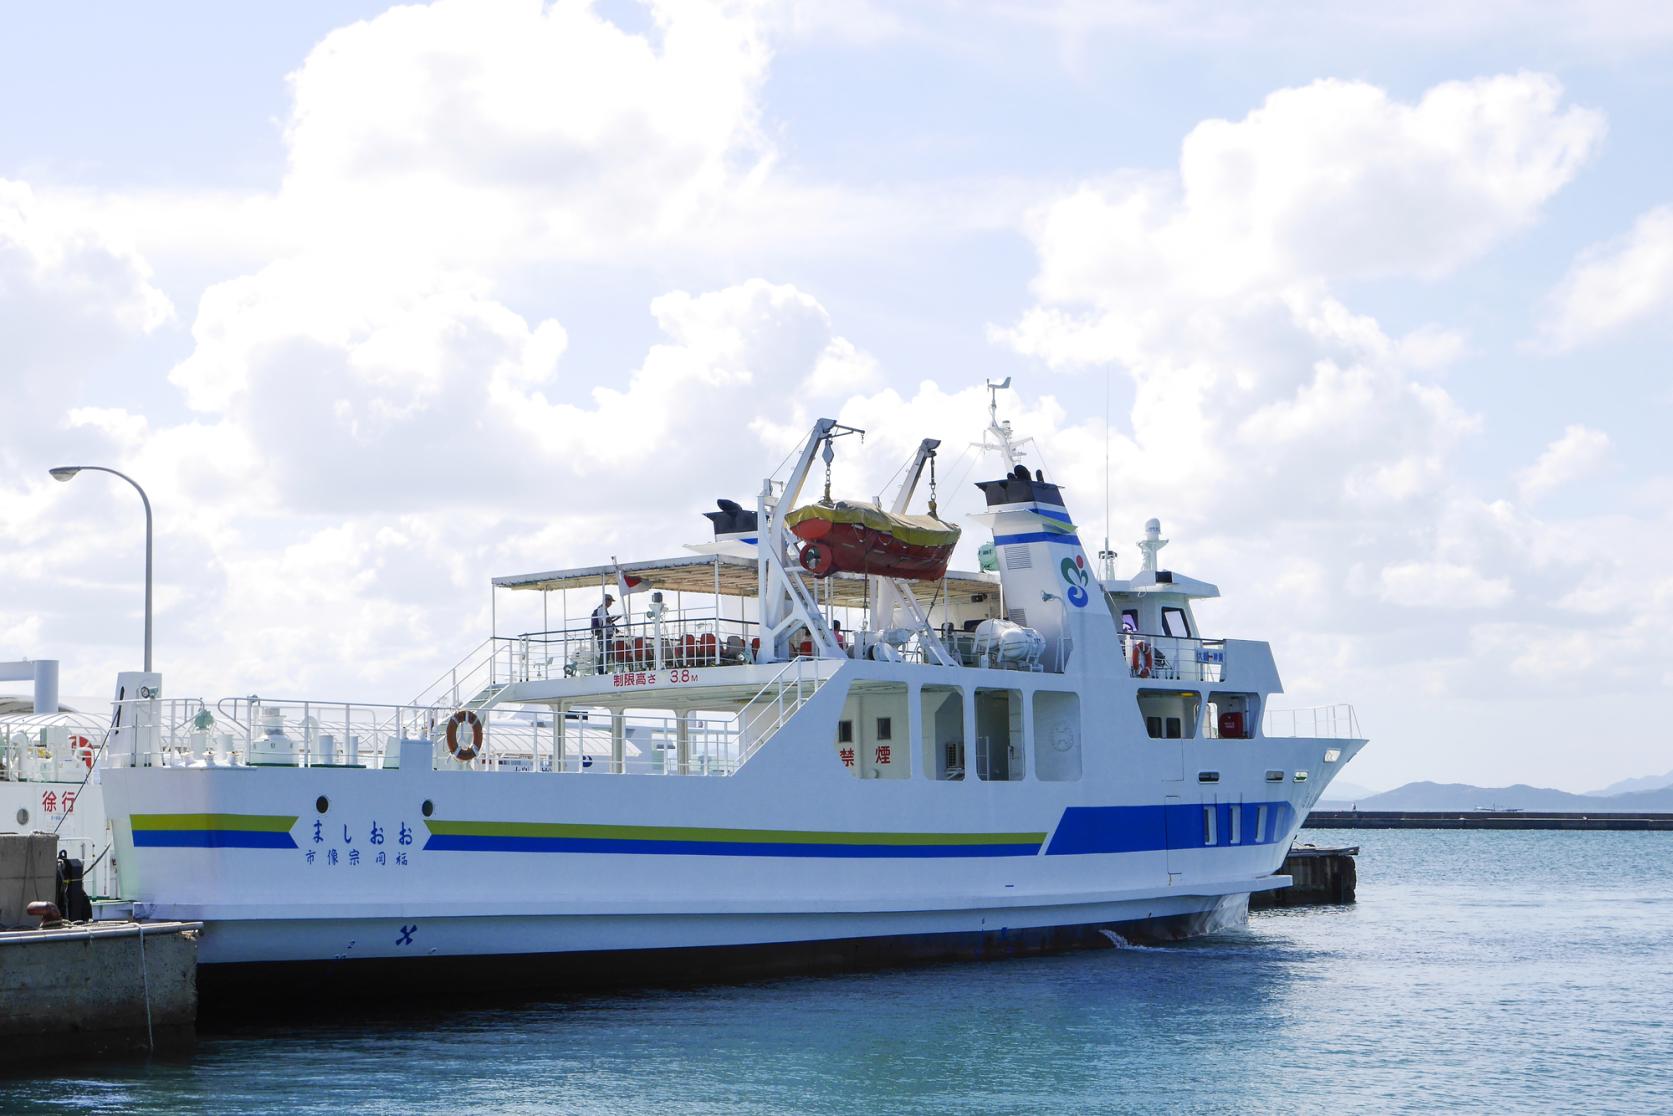 【Day1】11:15-11:30  Take the ferry from Konominato Port to Oshima